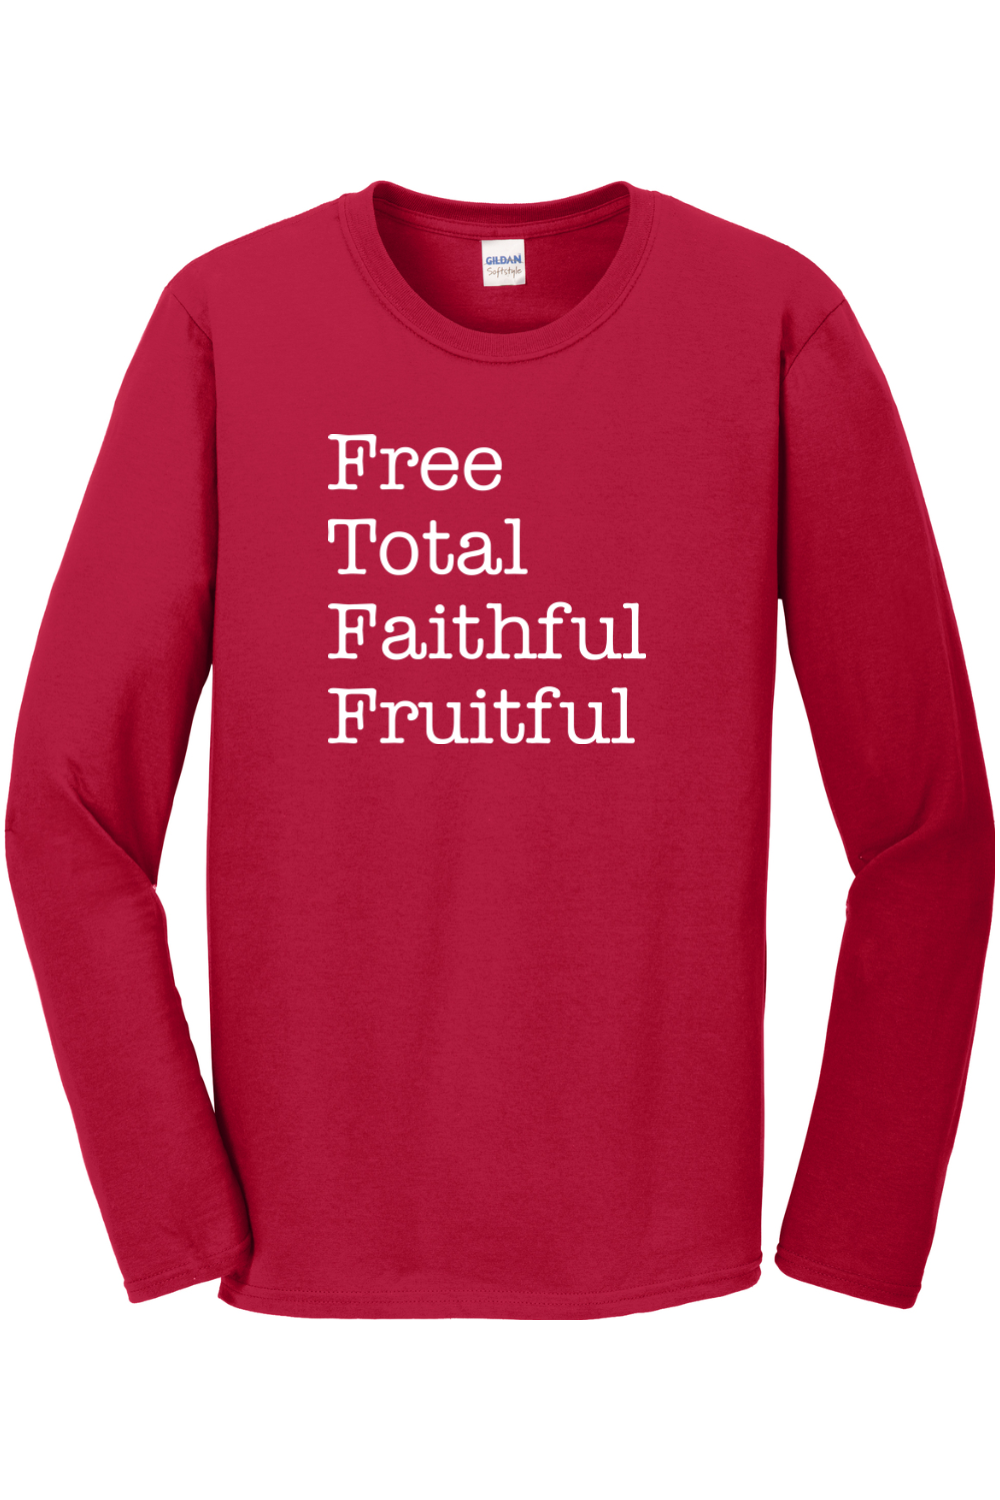 Free Total Faithful Fruitful - Theology of the Body Long Sleeve